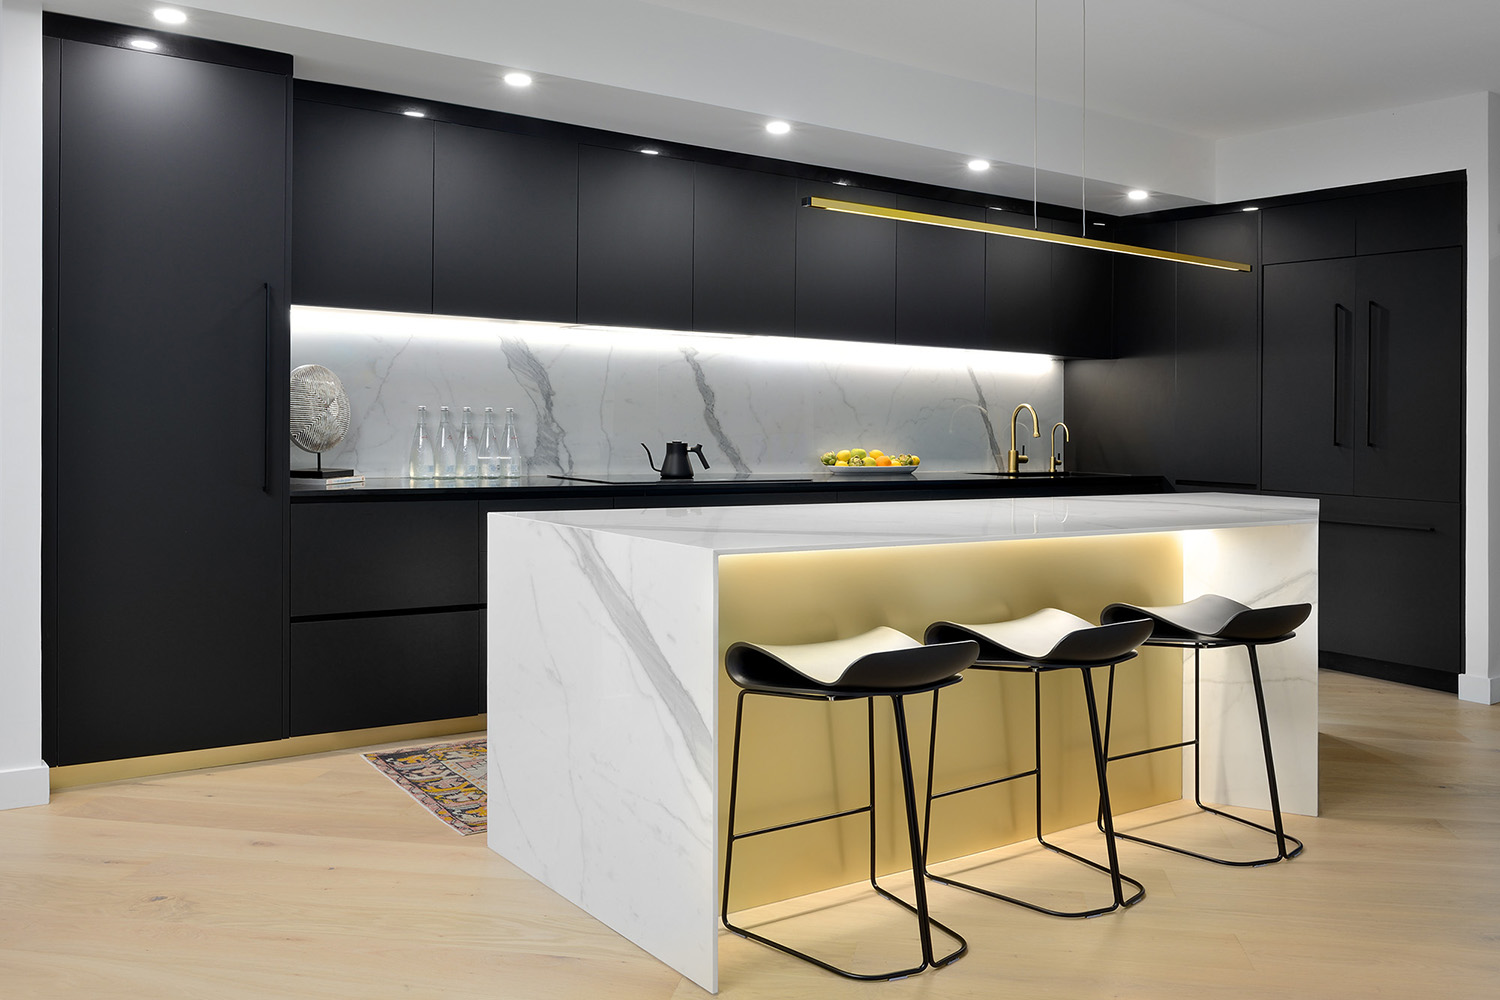 imans-residence-kitchen-1500×1000